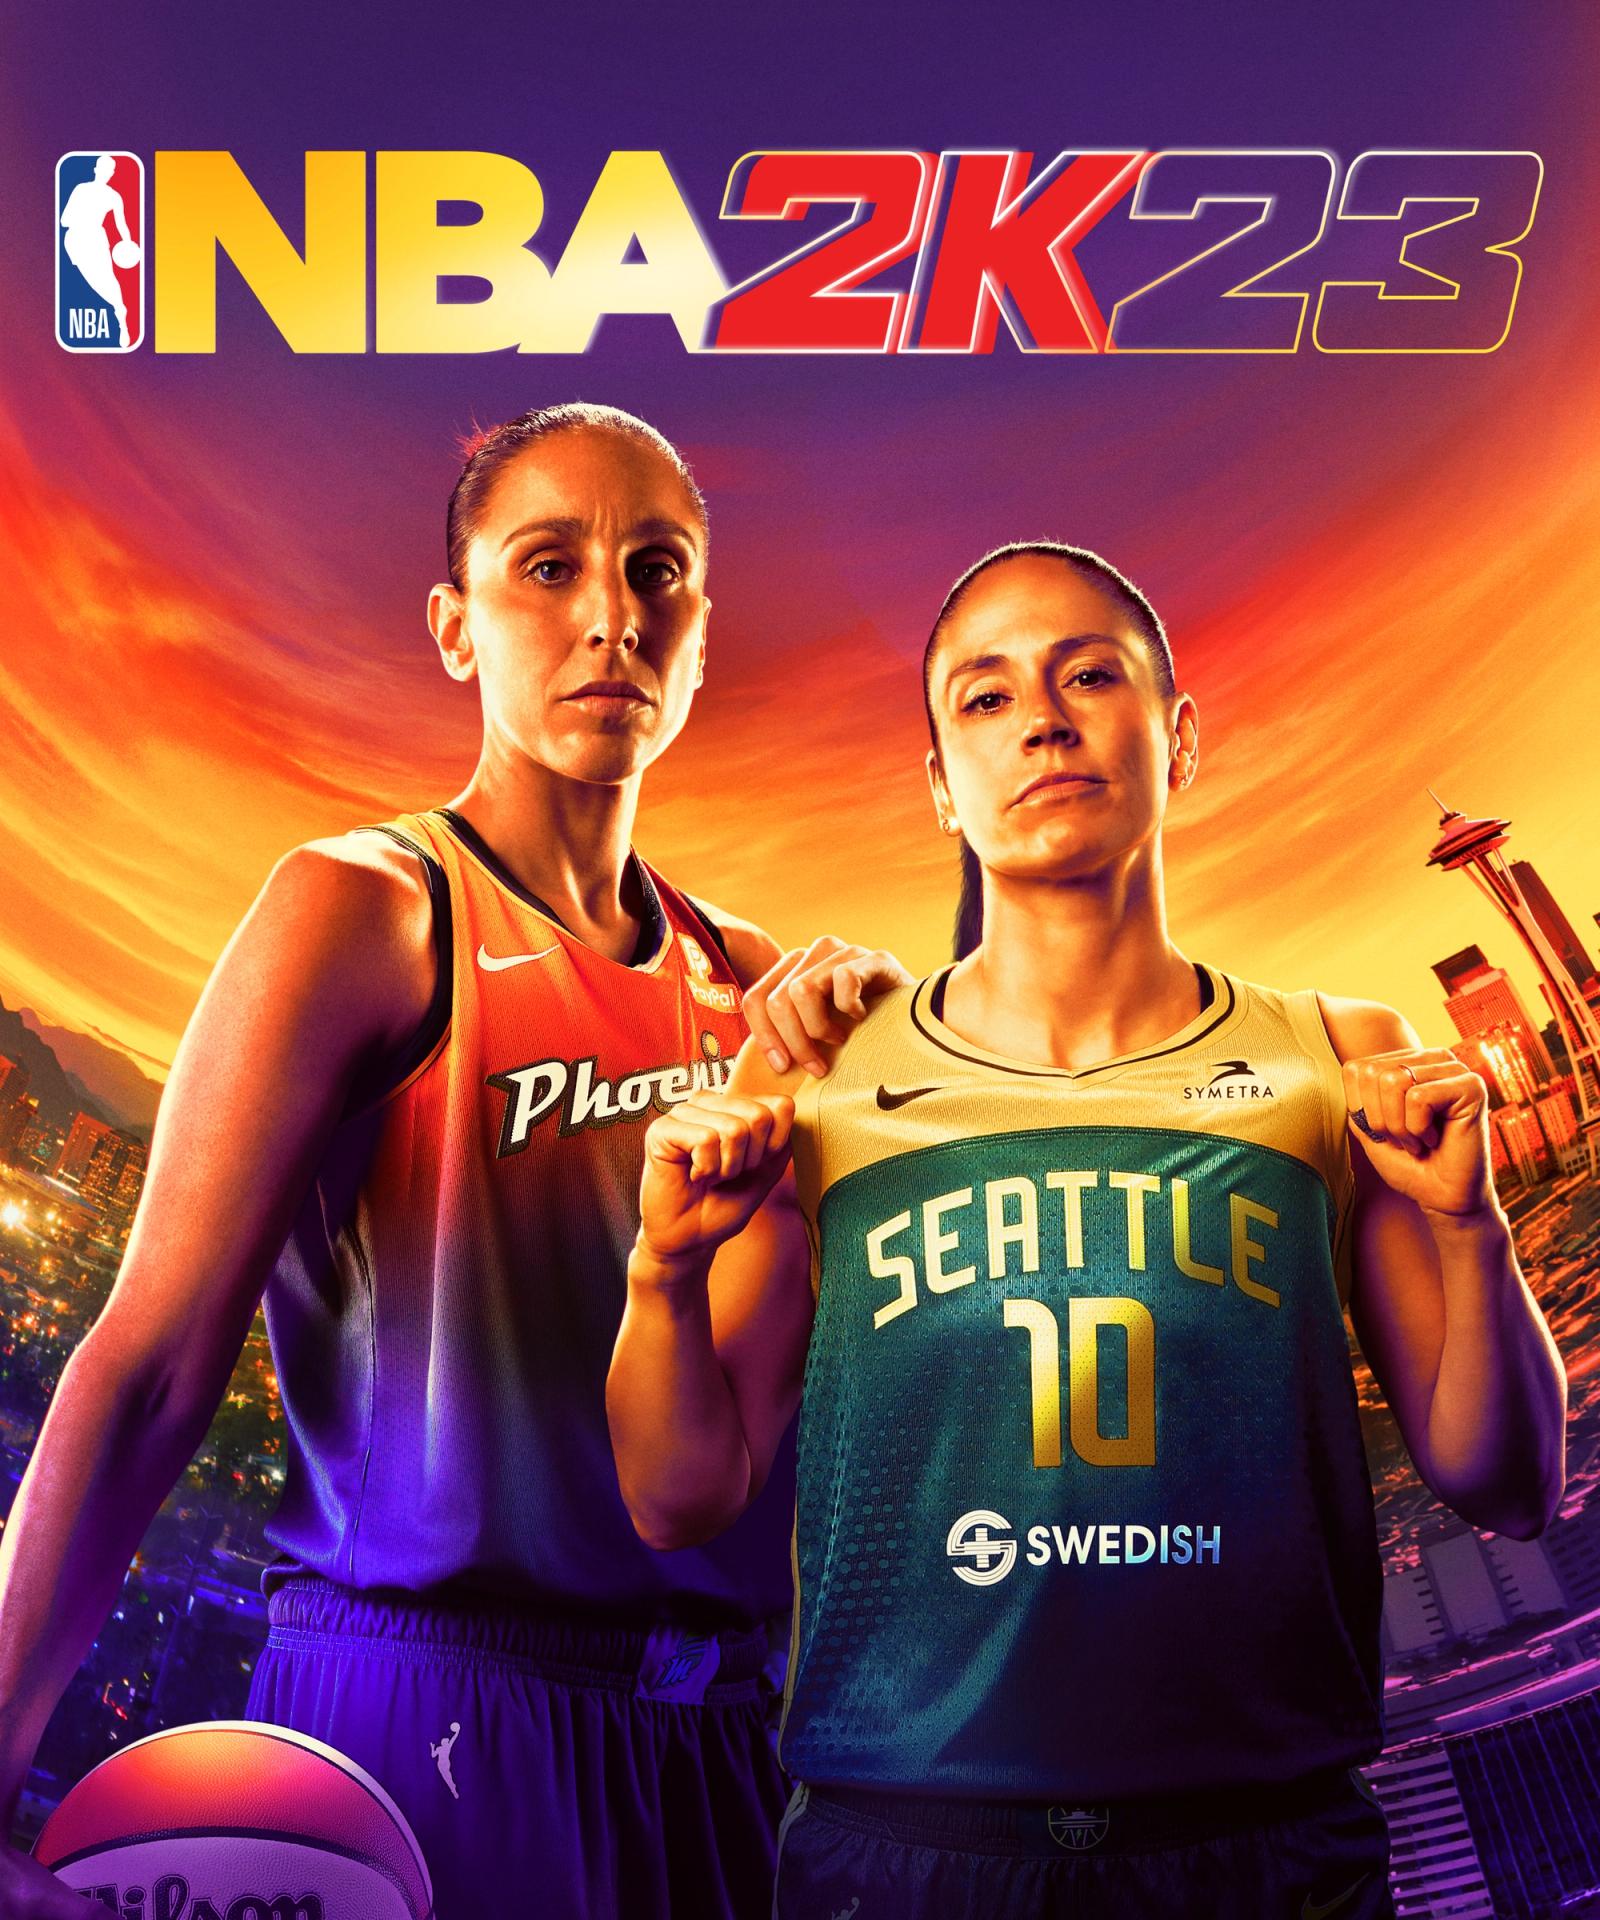 NBA 2K23 WNBA Edition